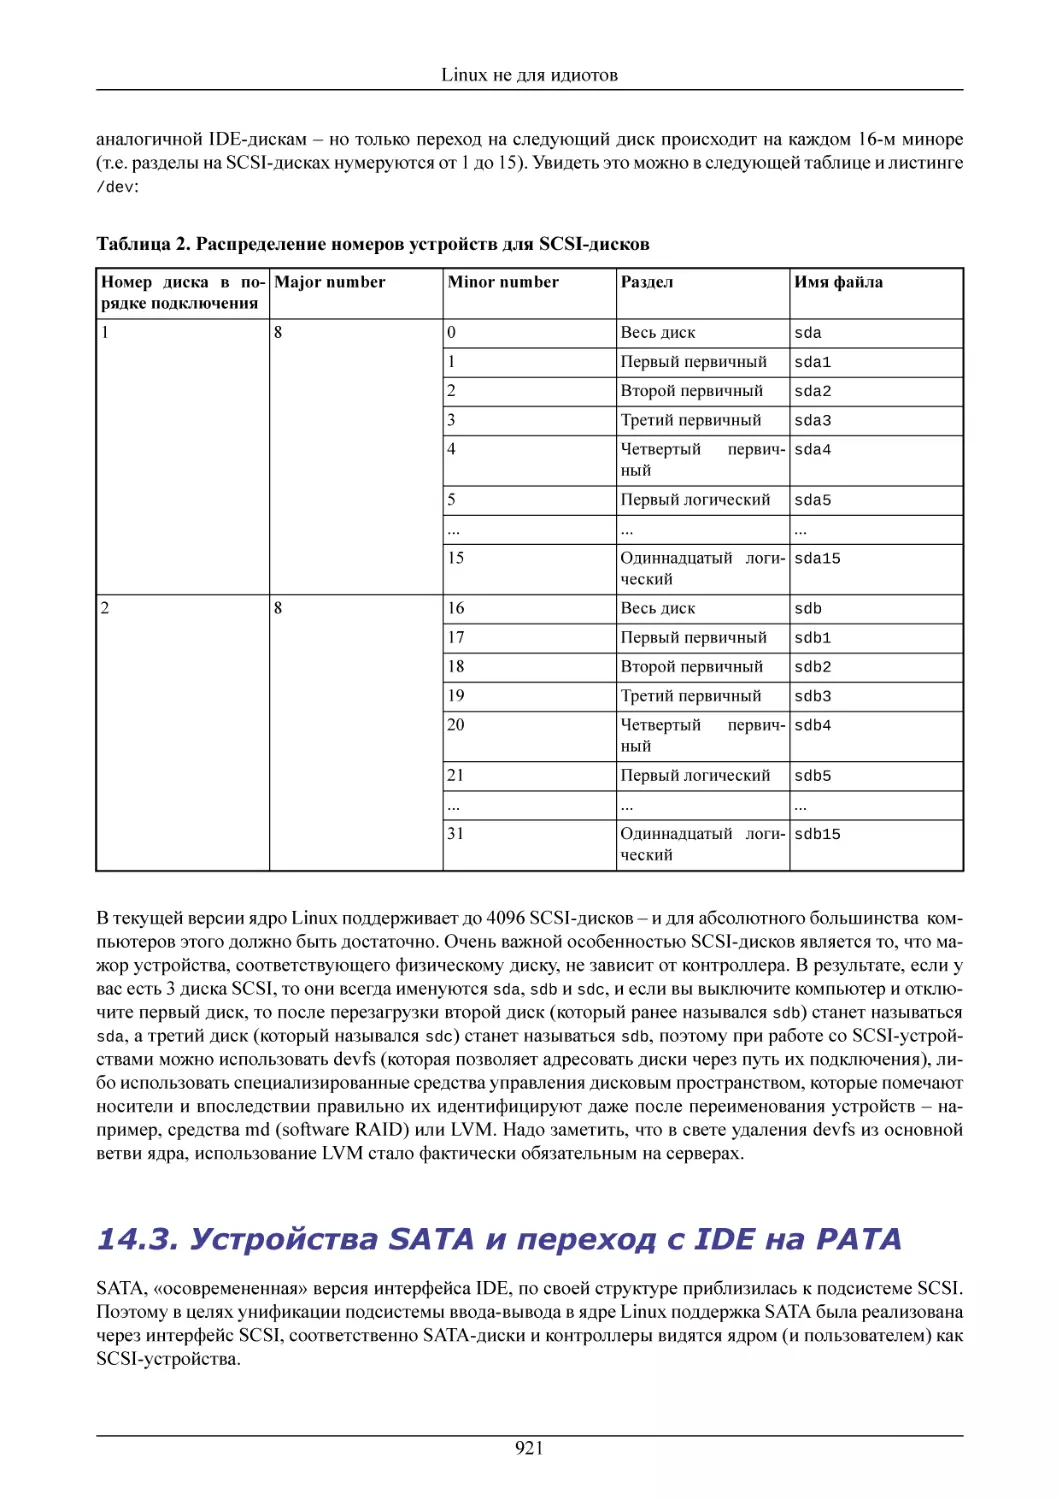 Устройства SATA и переход с IDE на PATA